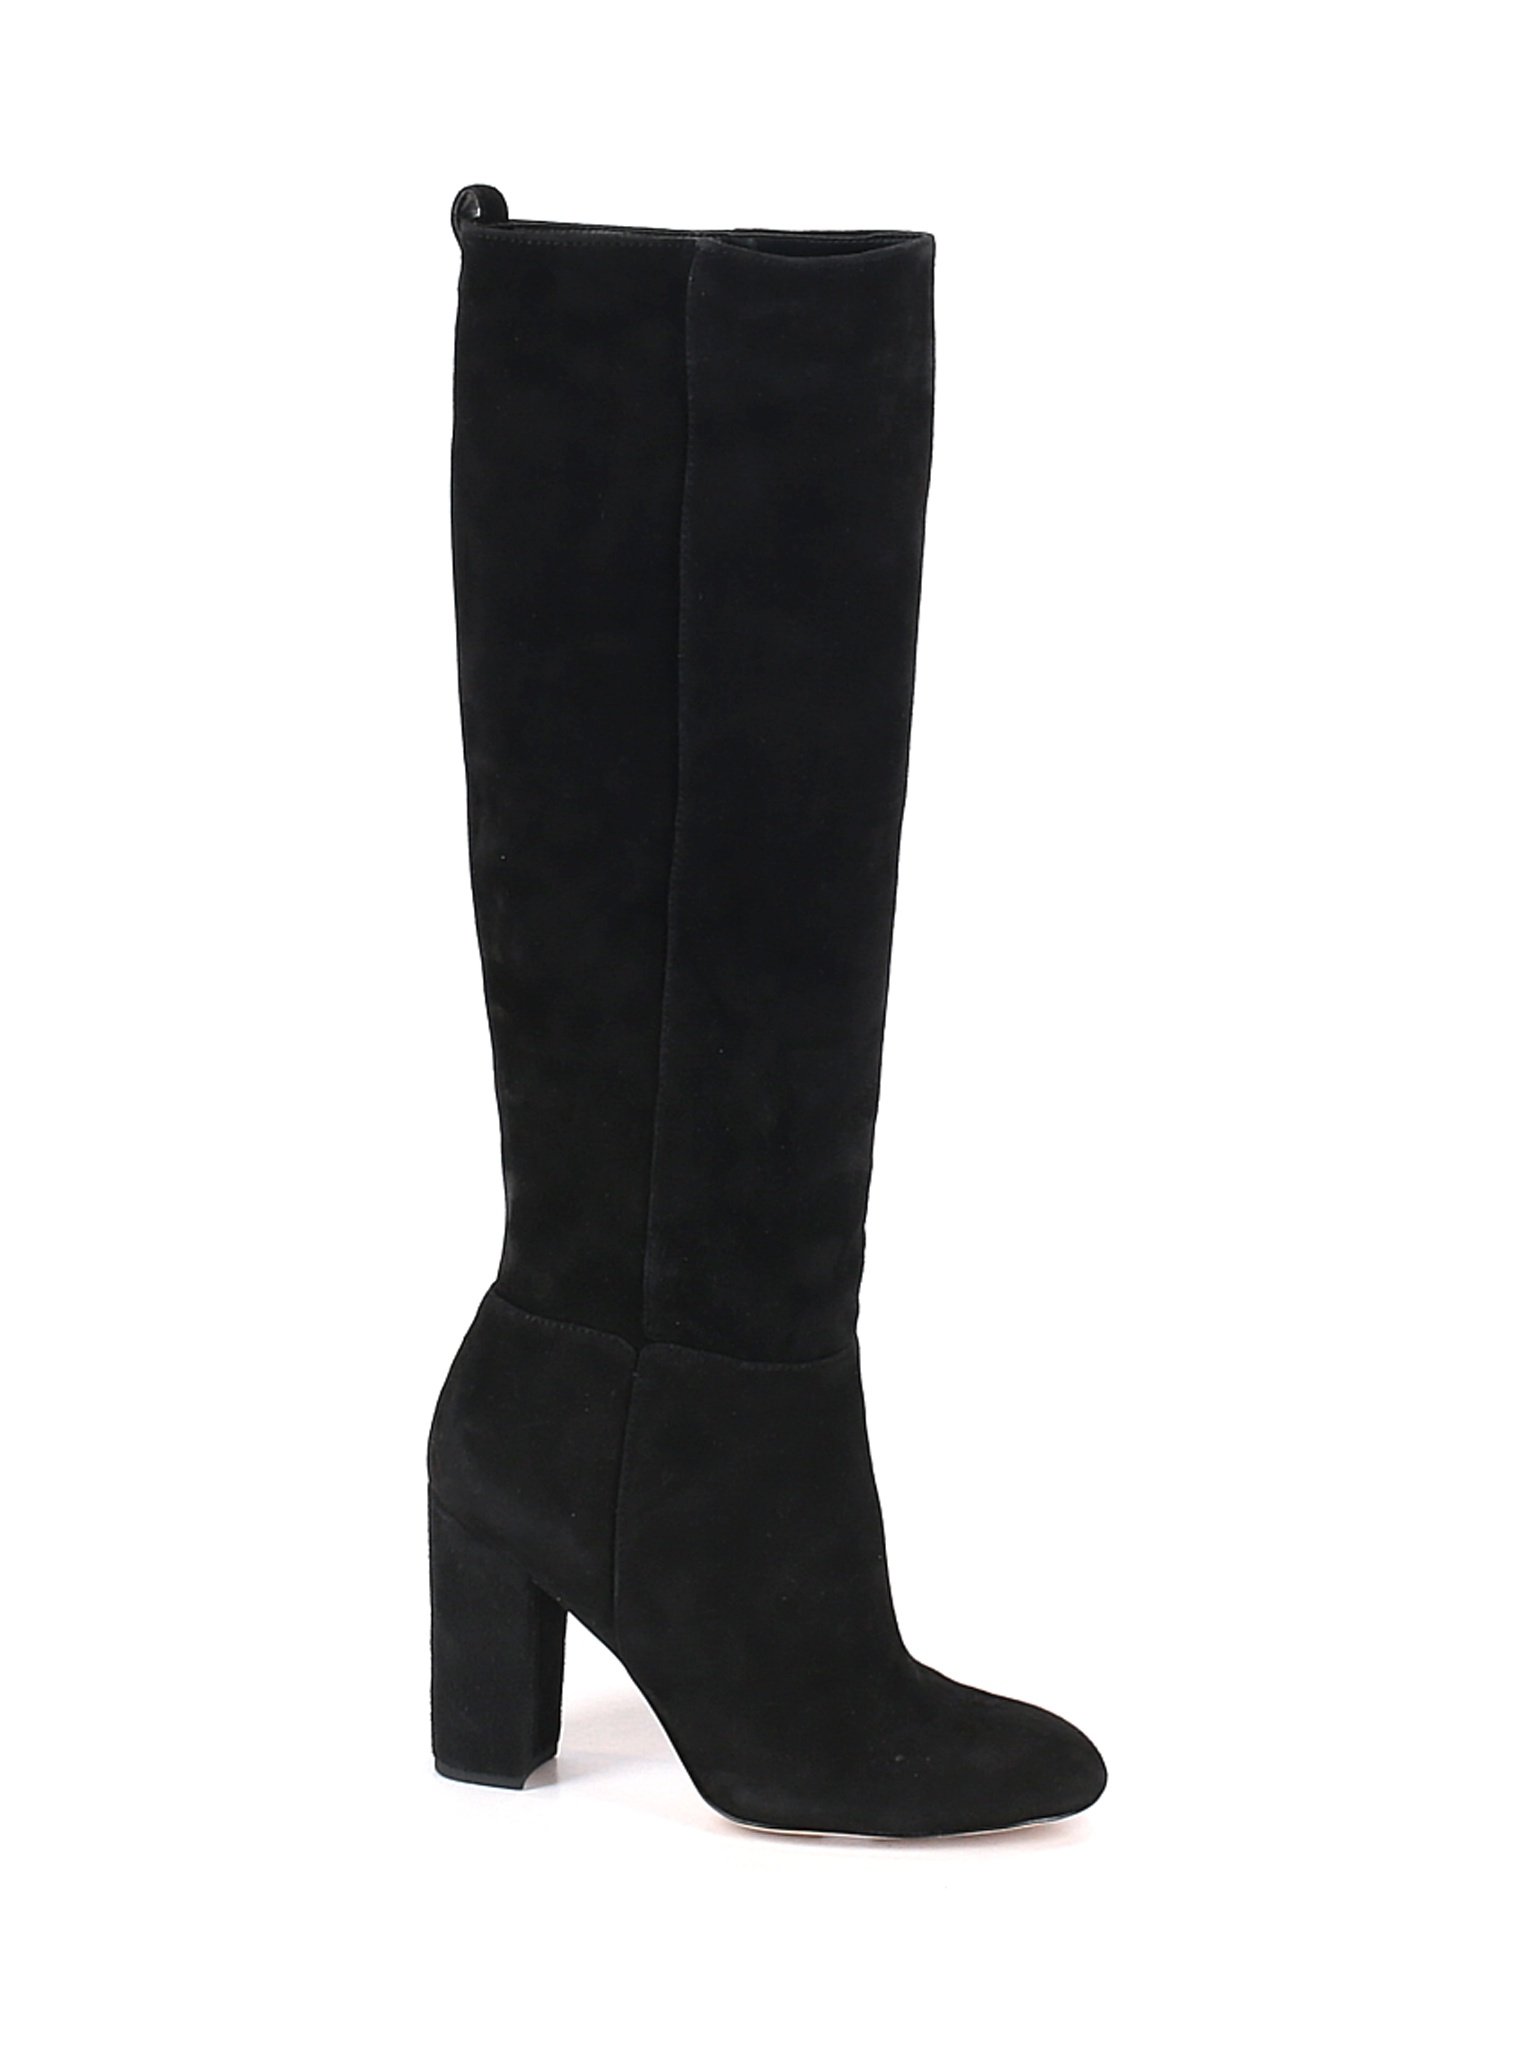 Sam Edelman Women Black Boots US 6 | eBay